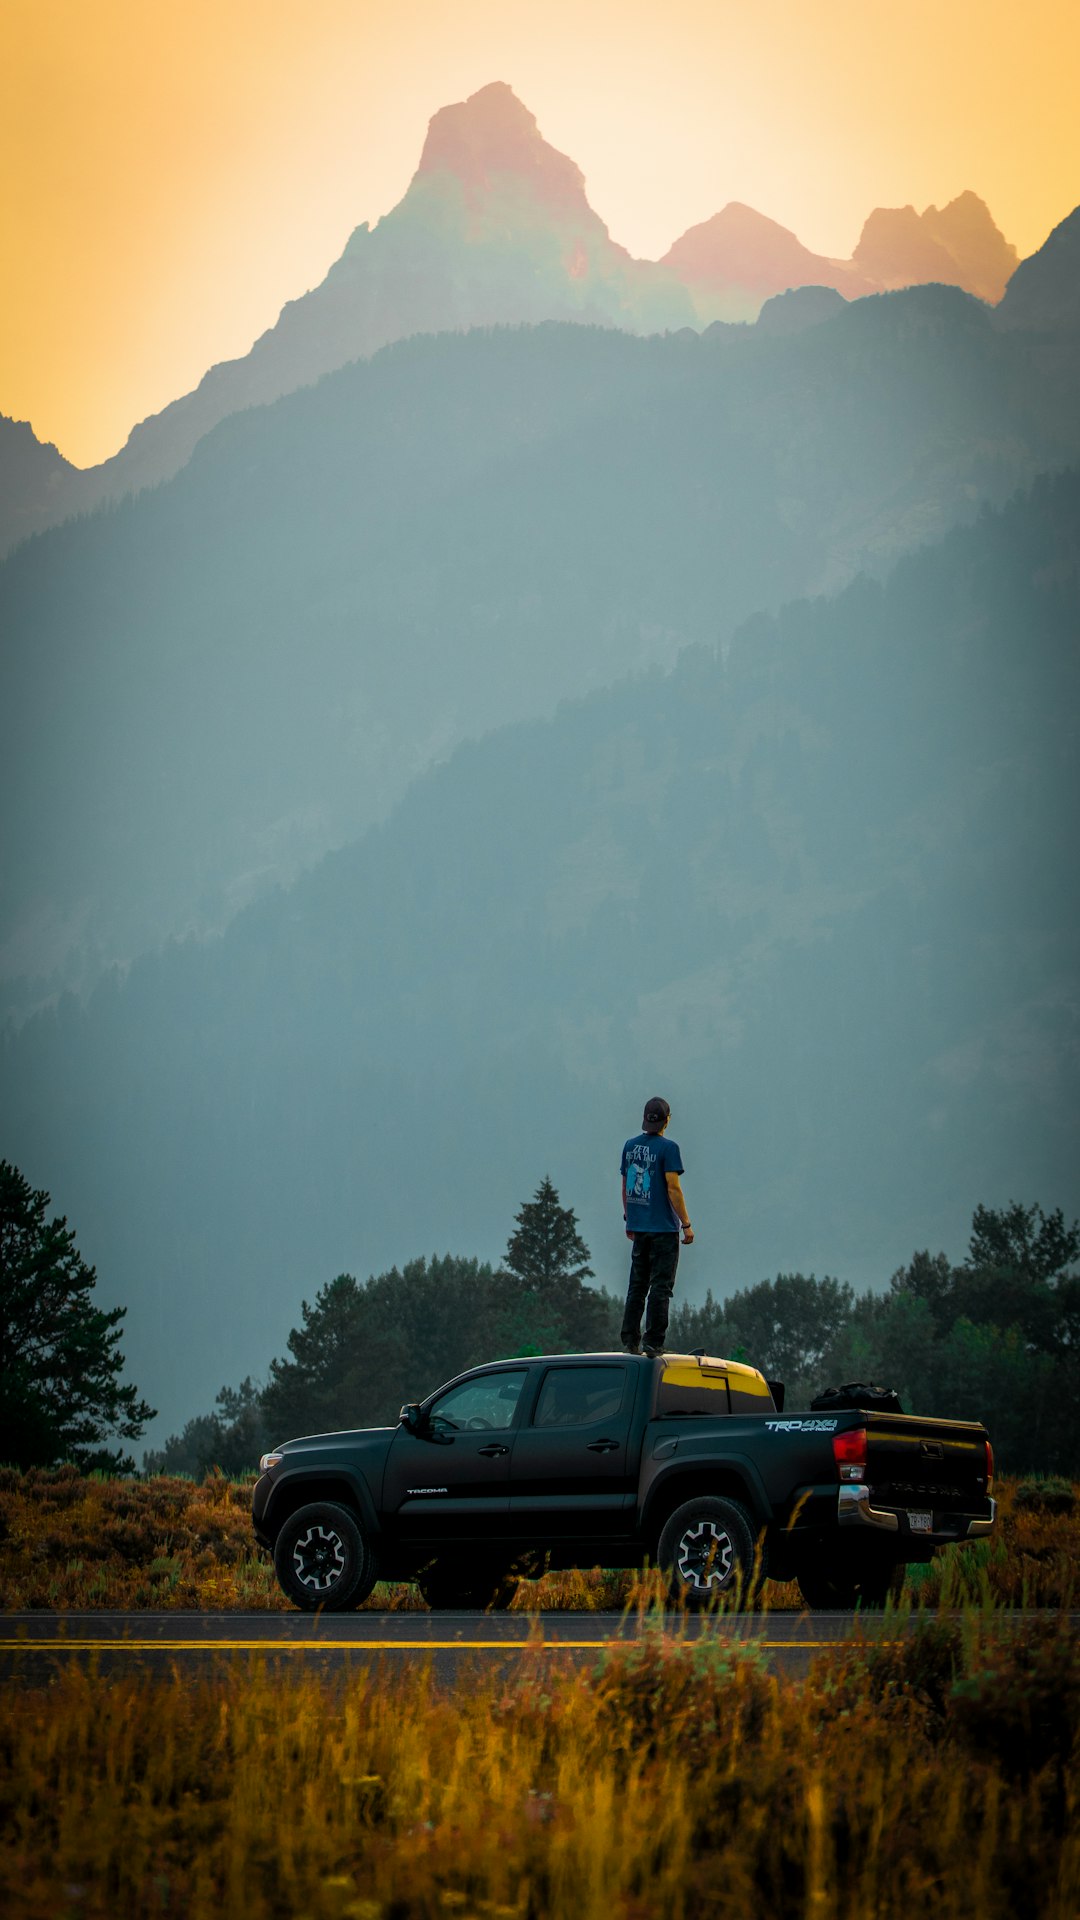 man in black jacket standing on yellow car during daytime